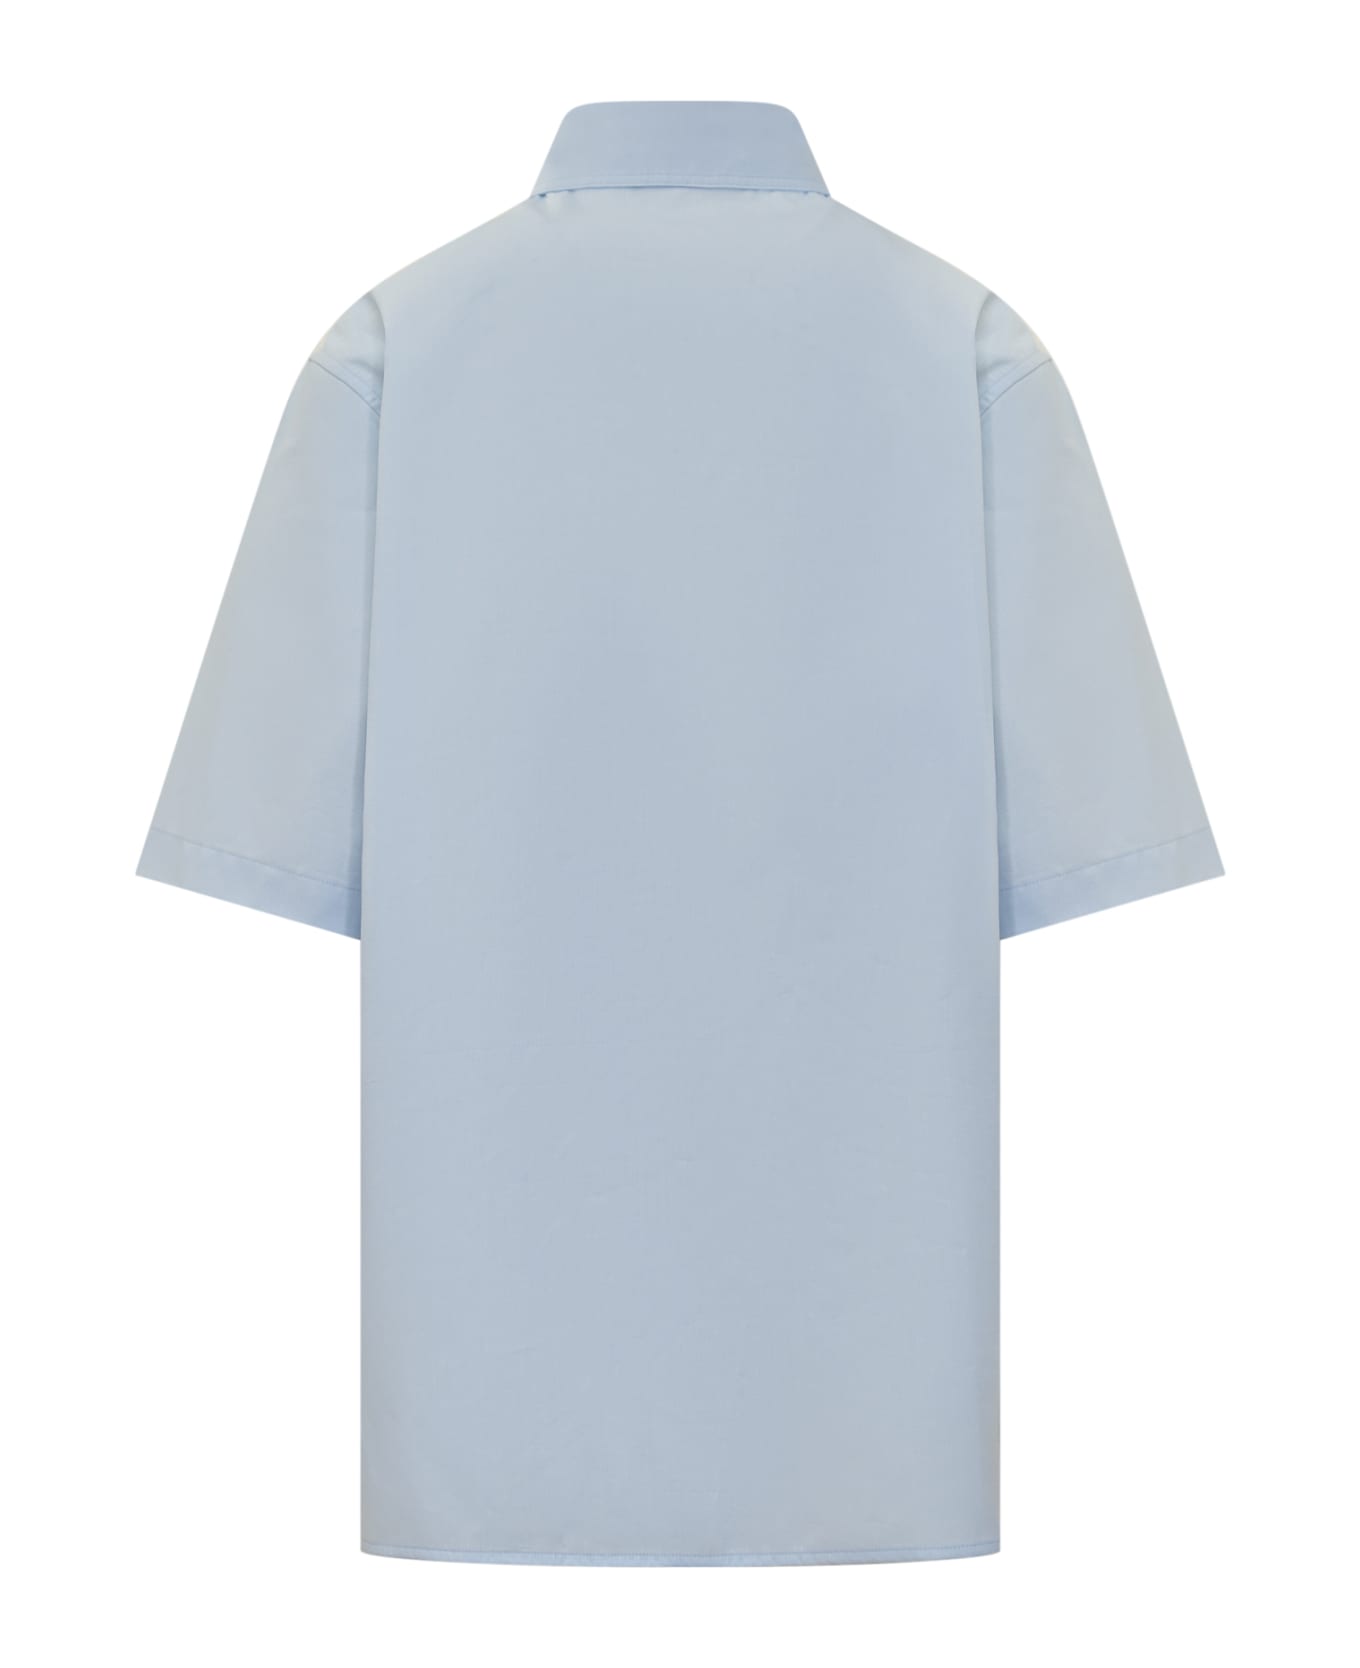 DARKPARK Shirt With Logo - Clear Blue